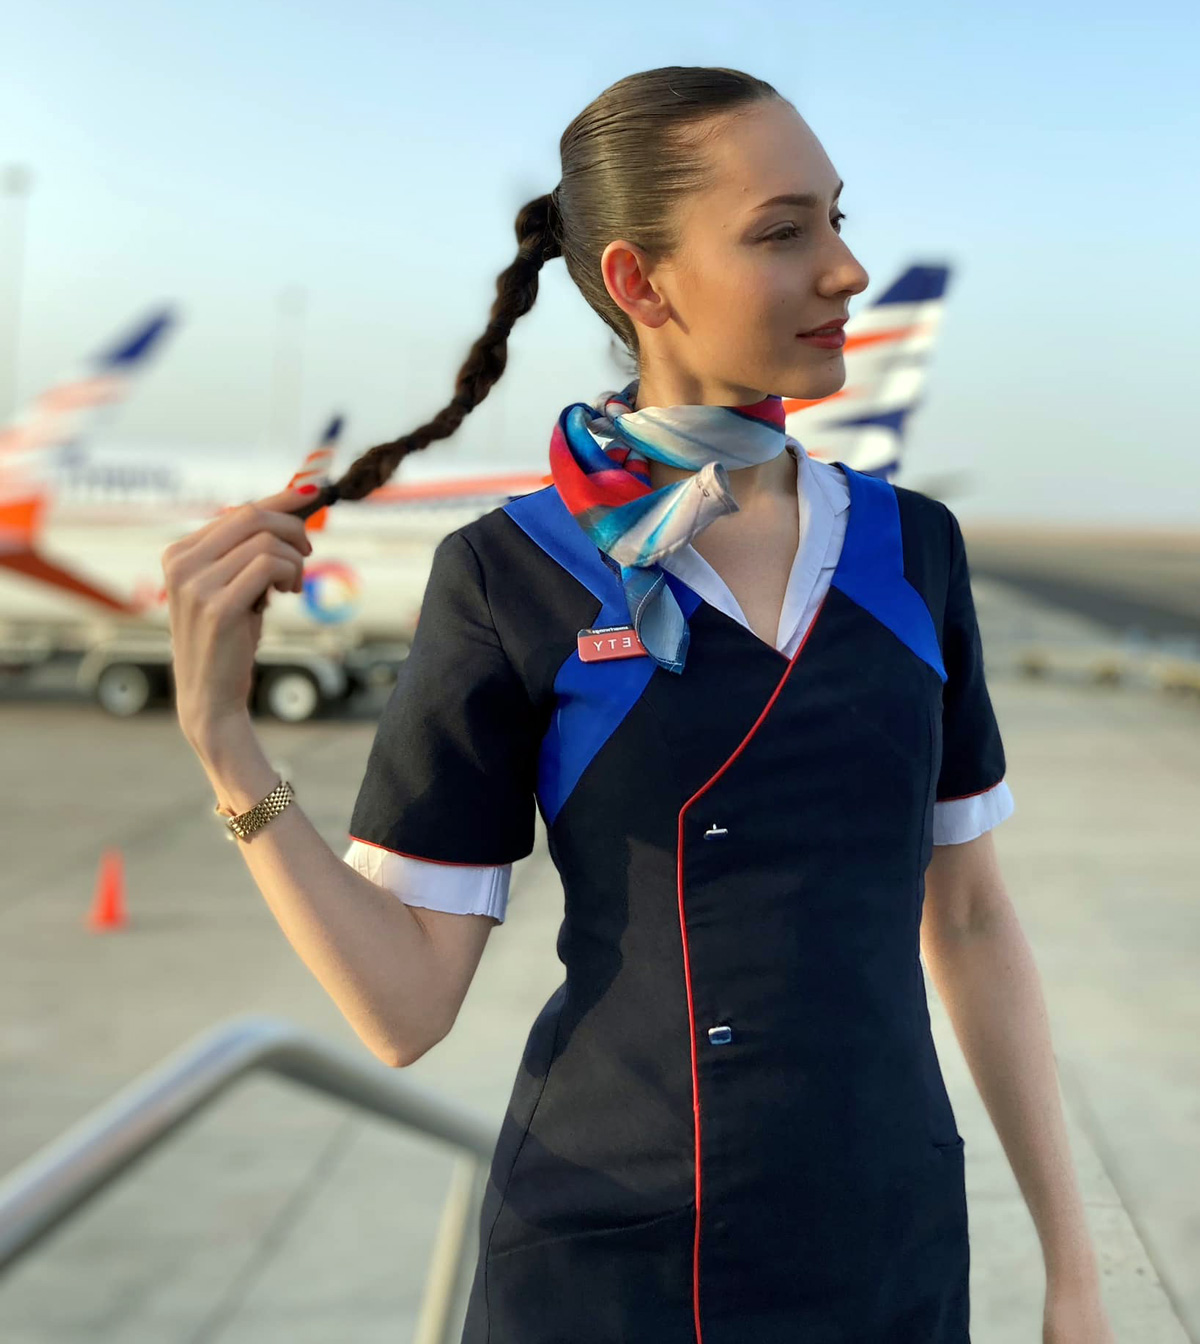 Smartwings is looking for Flight Attendants, base in Prague